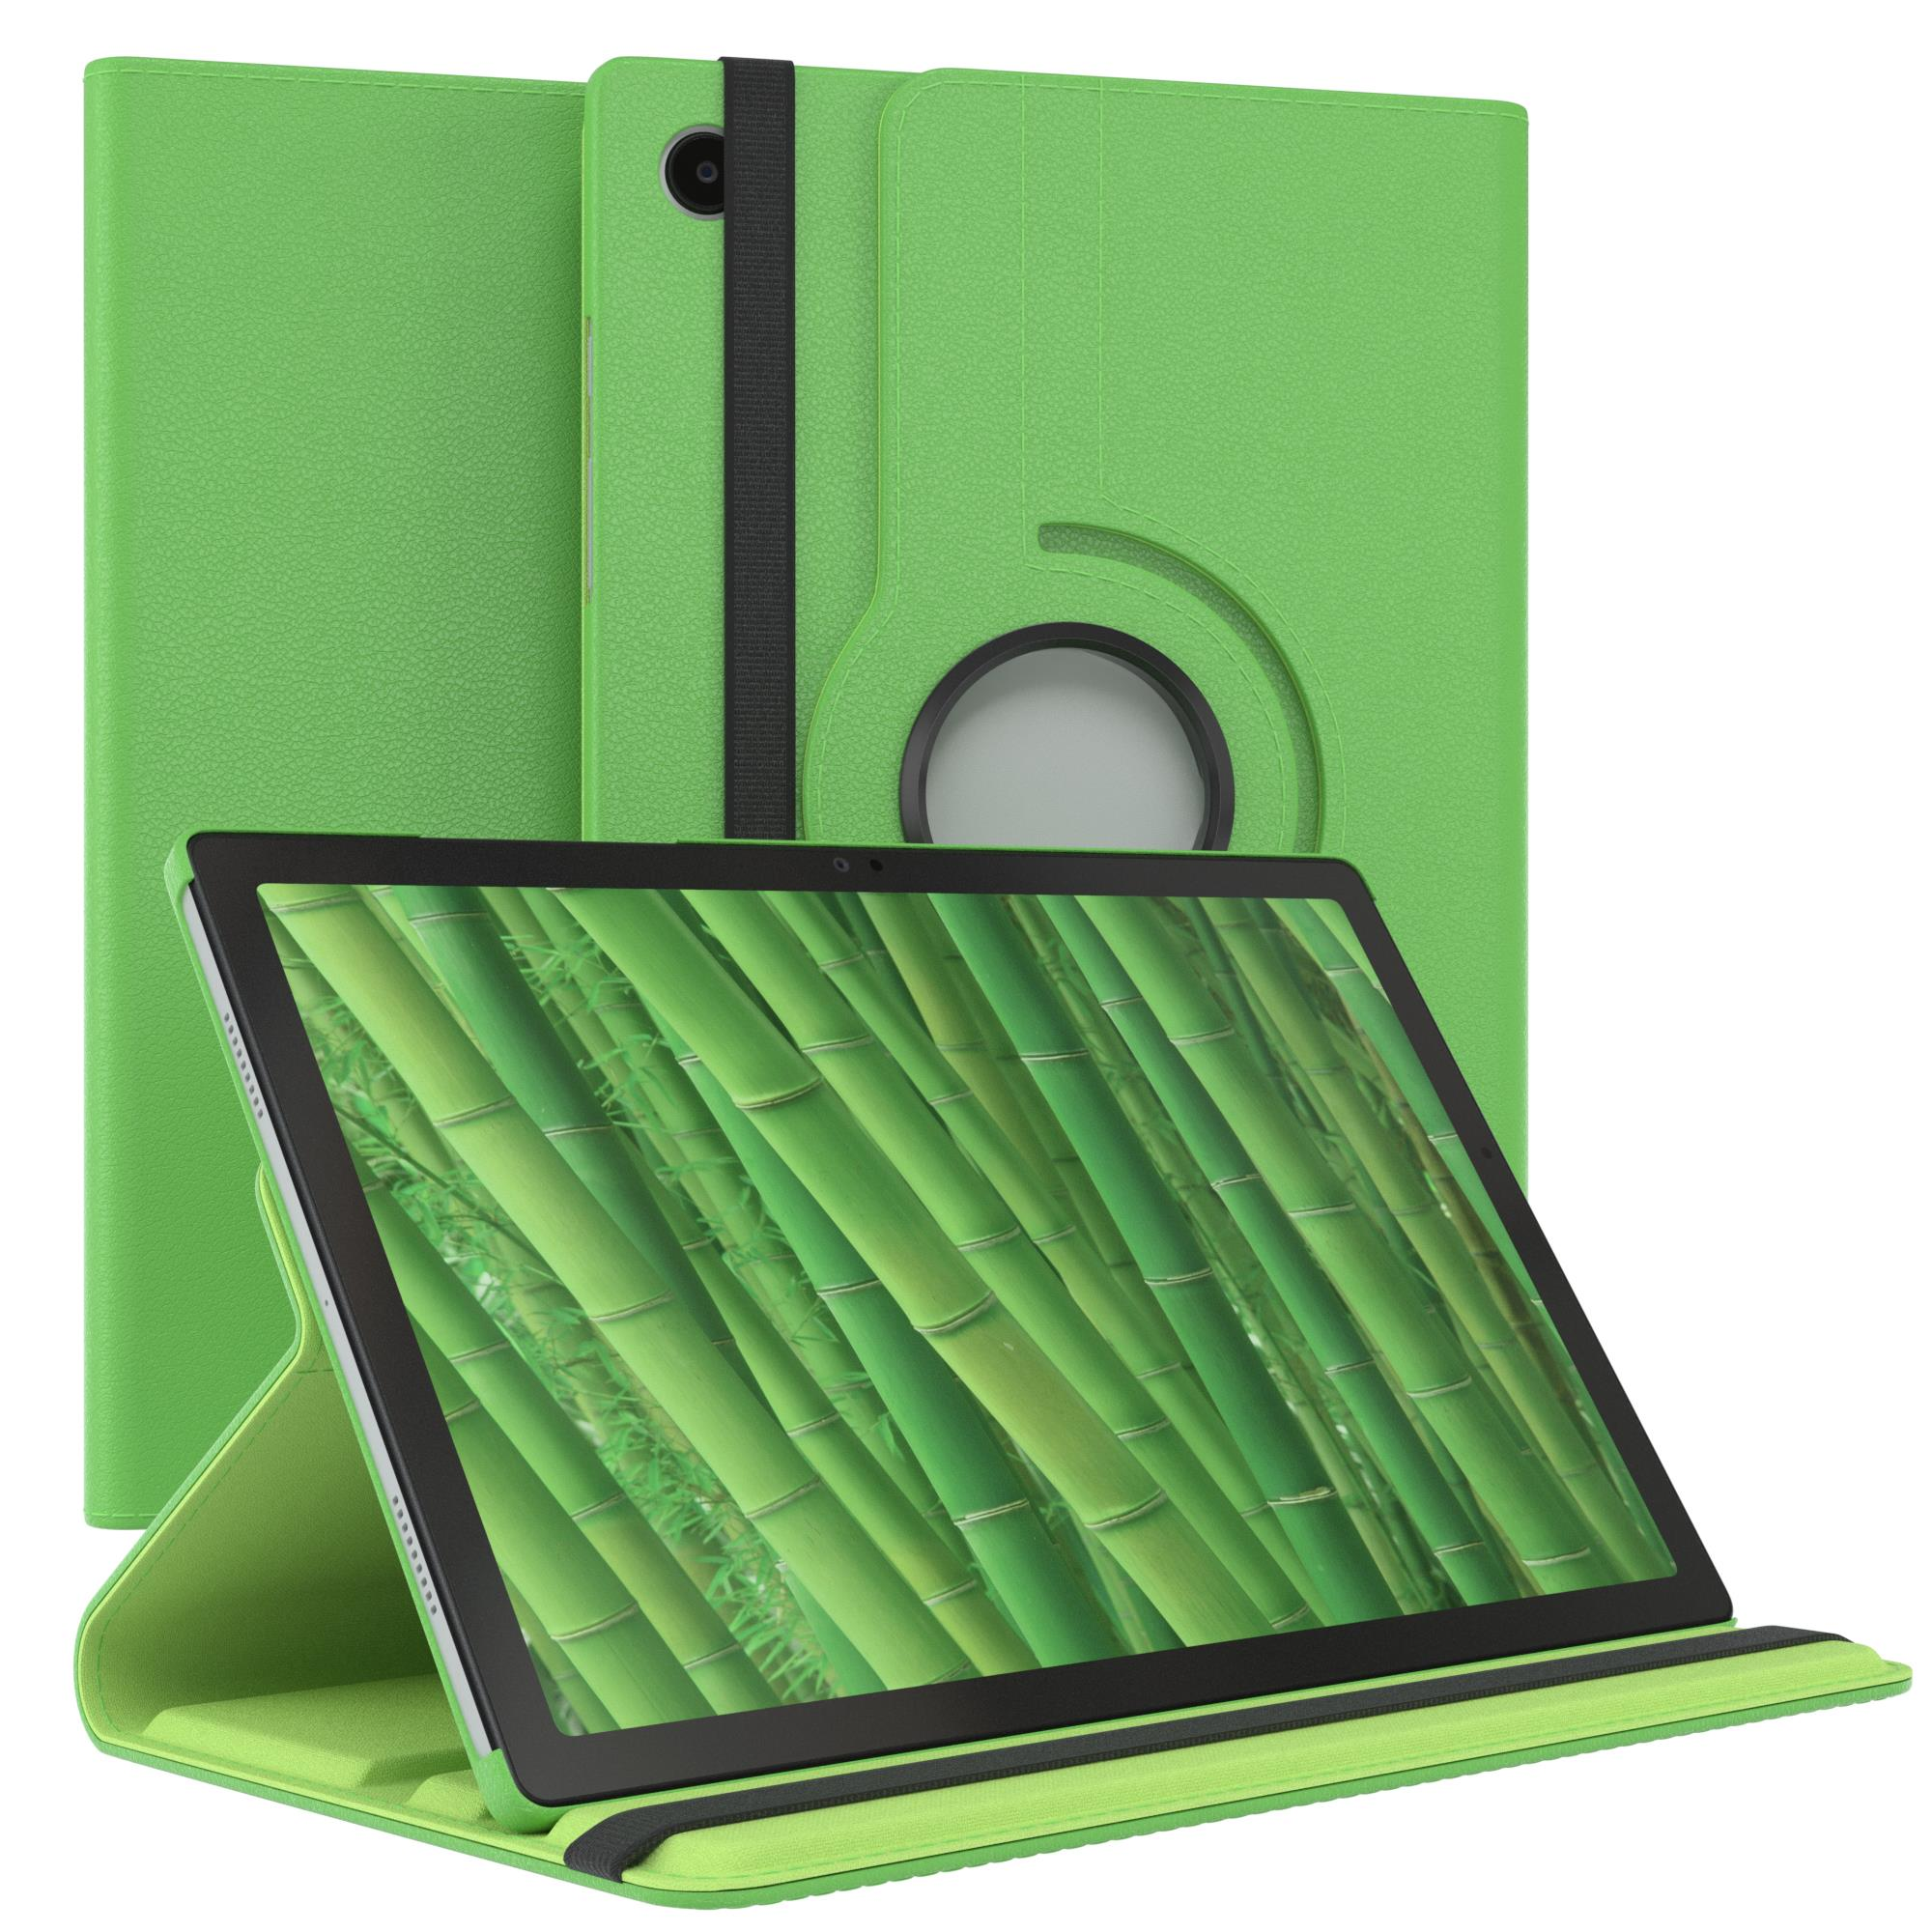 EAZY CASE Bookcover Galaxy LTE Tab Grün Schutzhülle Rotationcase für 10.5\